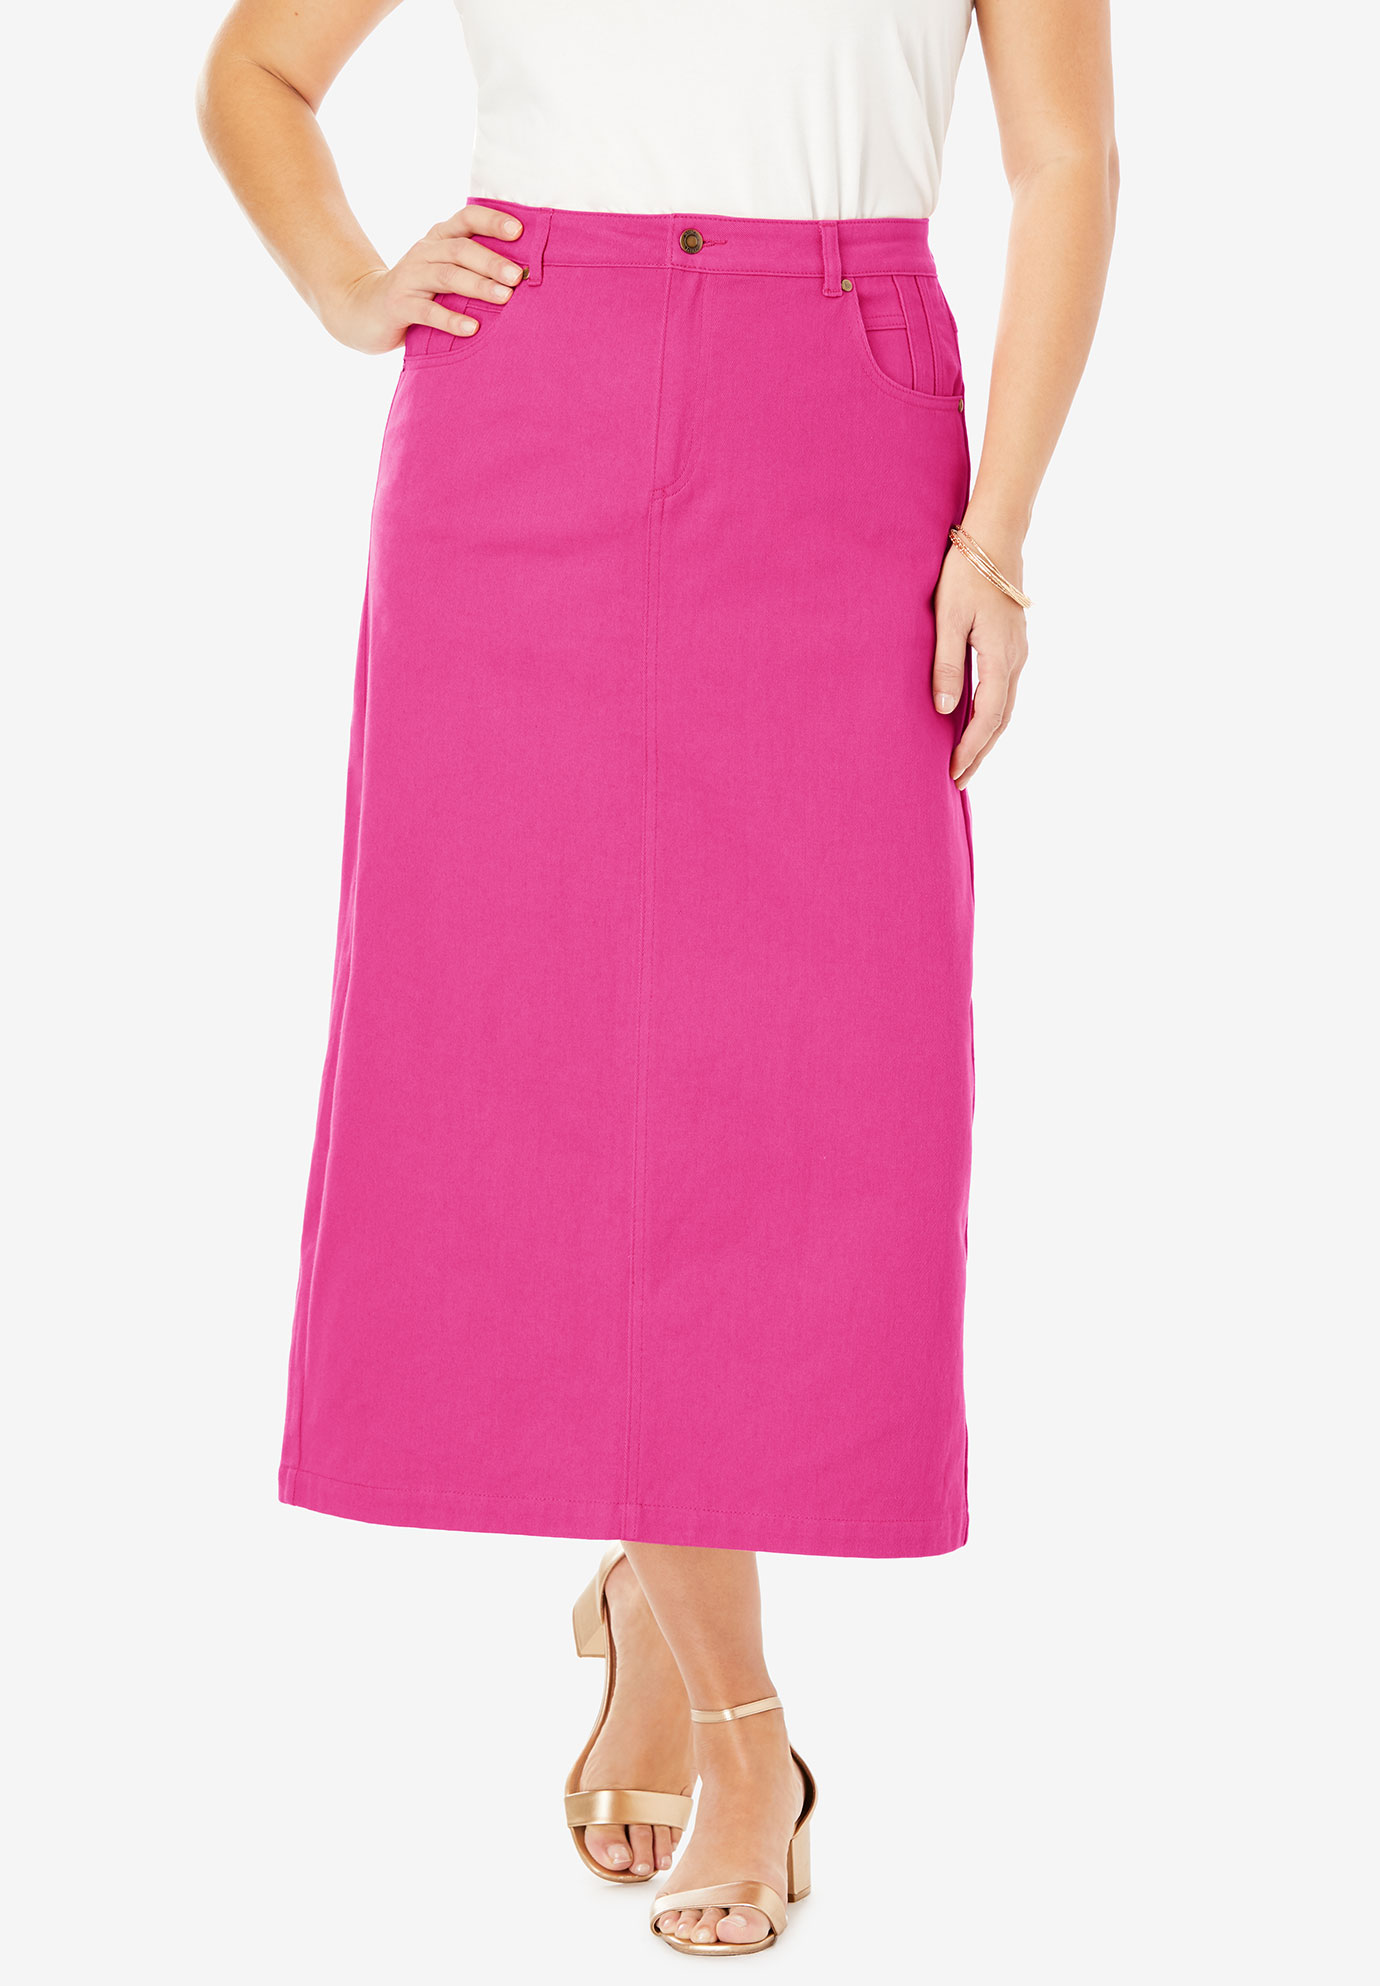 plus size pink denim skirt